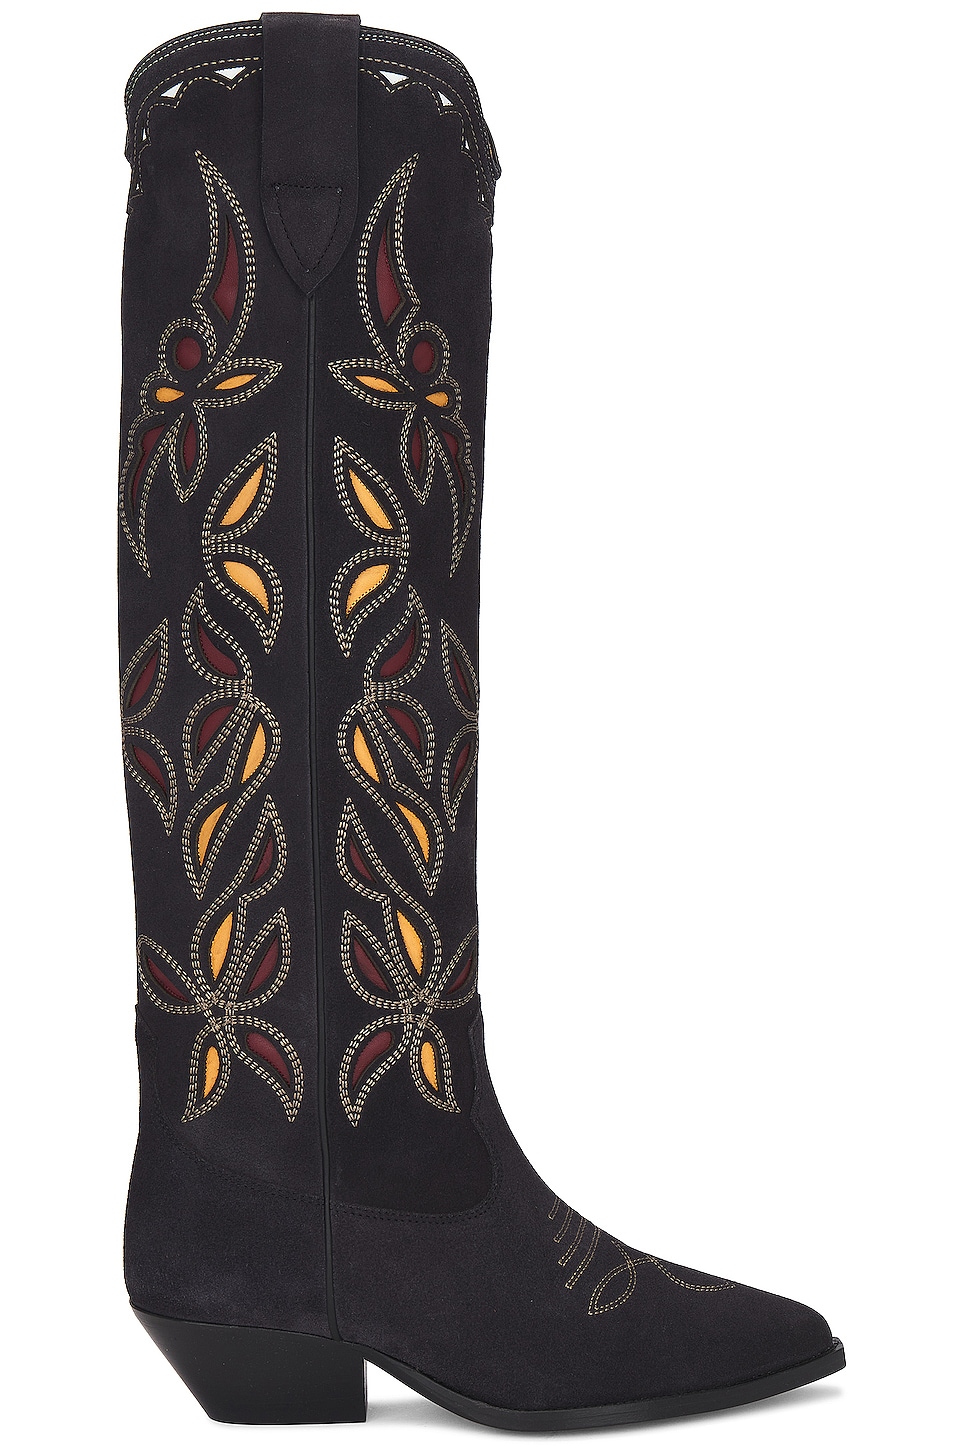 Image 1 of Isabel Marant Denvee Boot in Faded Black & Burgundy